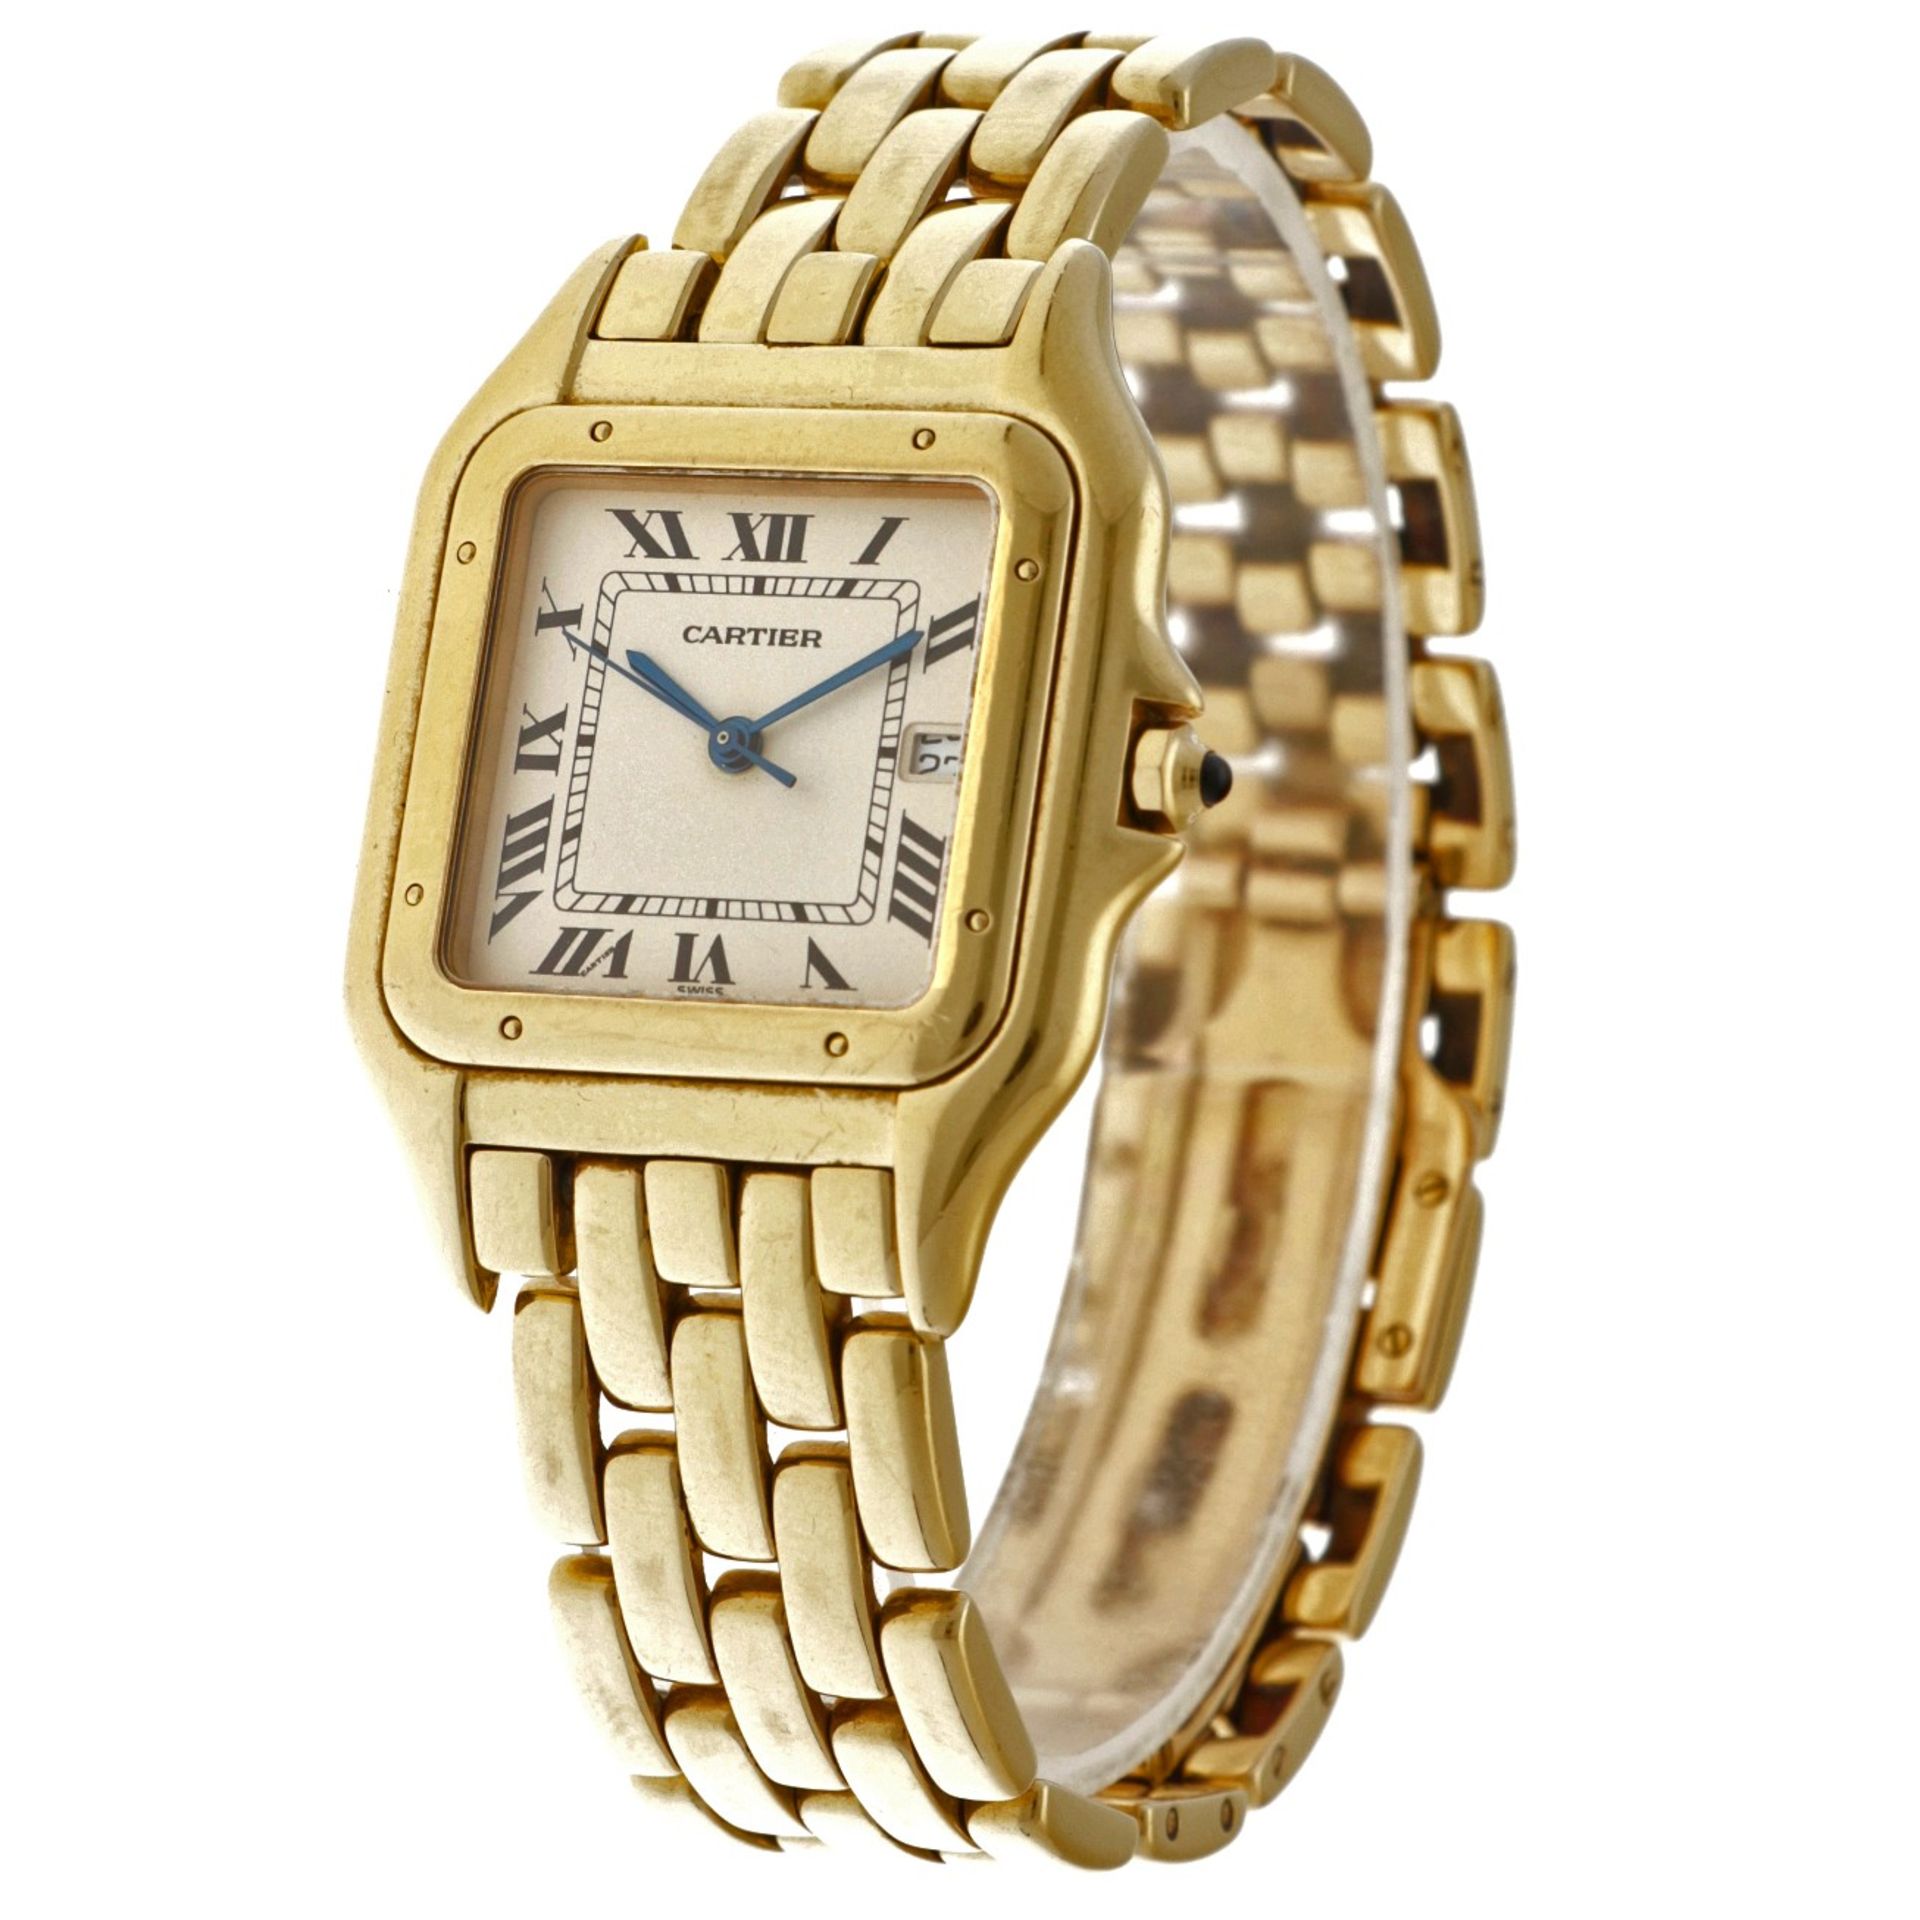 Cartier Panthère Jumbo 18K. 8839 - Men's watch. - Image 2 of 6